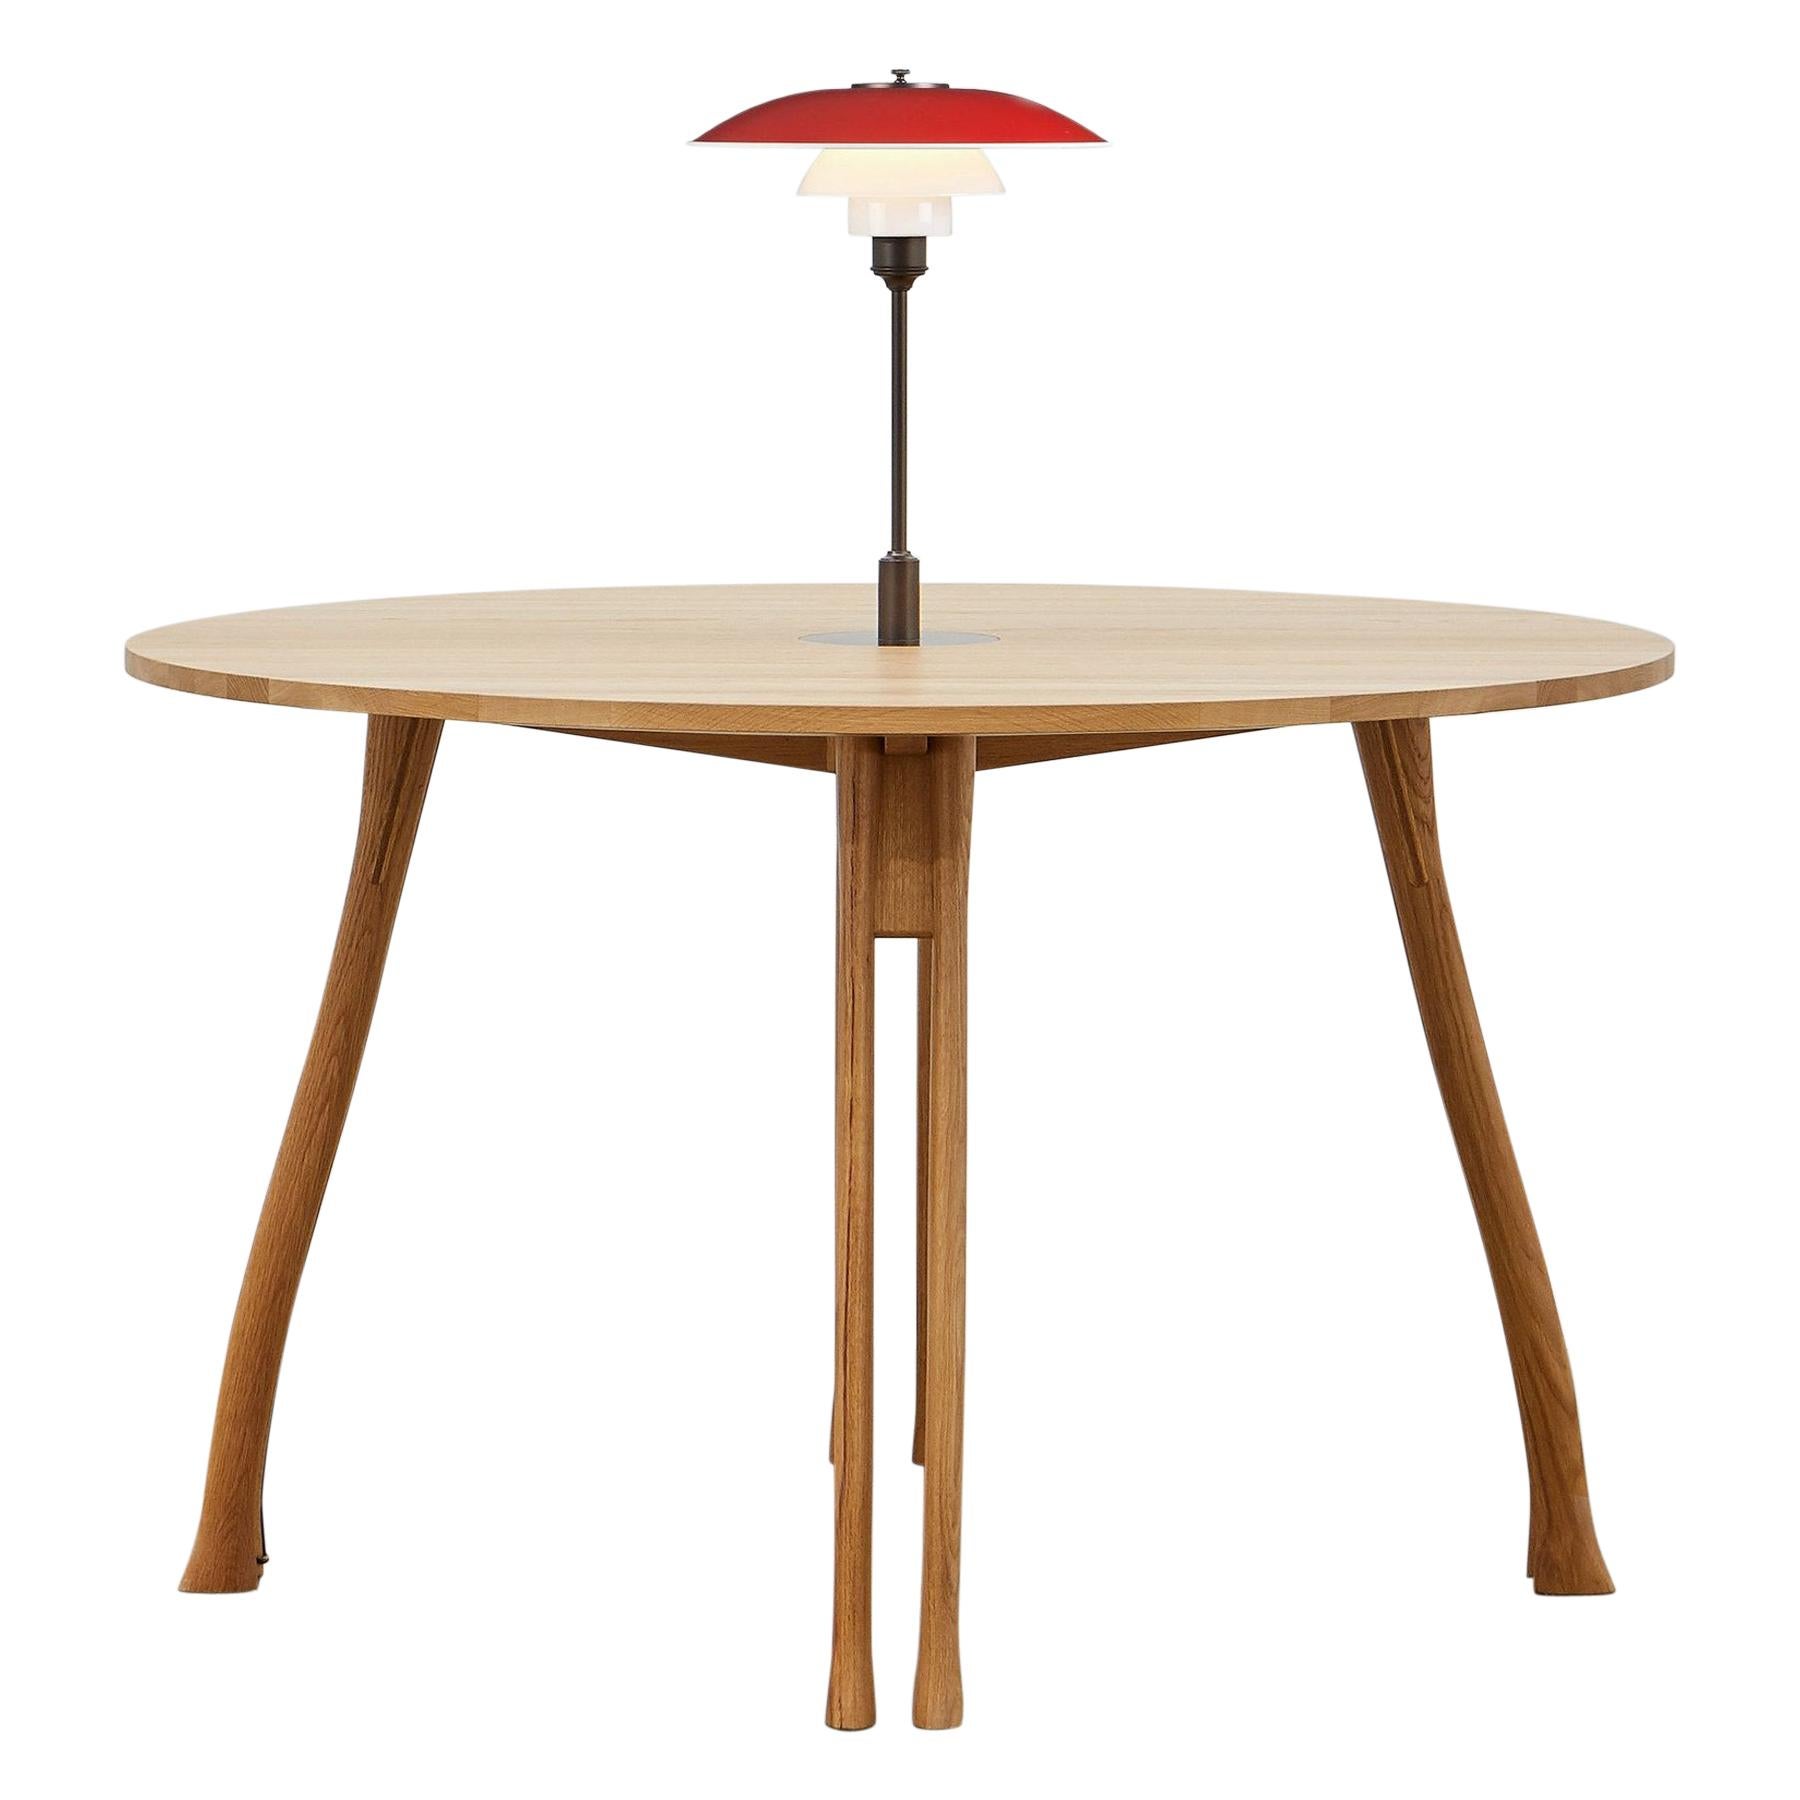 PH Axe Table, natural oak legs, veneer table plate, red PH 3 ½ - 2 ½ lamp For Sale